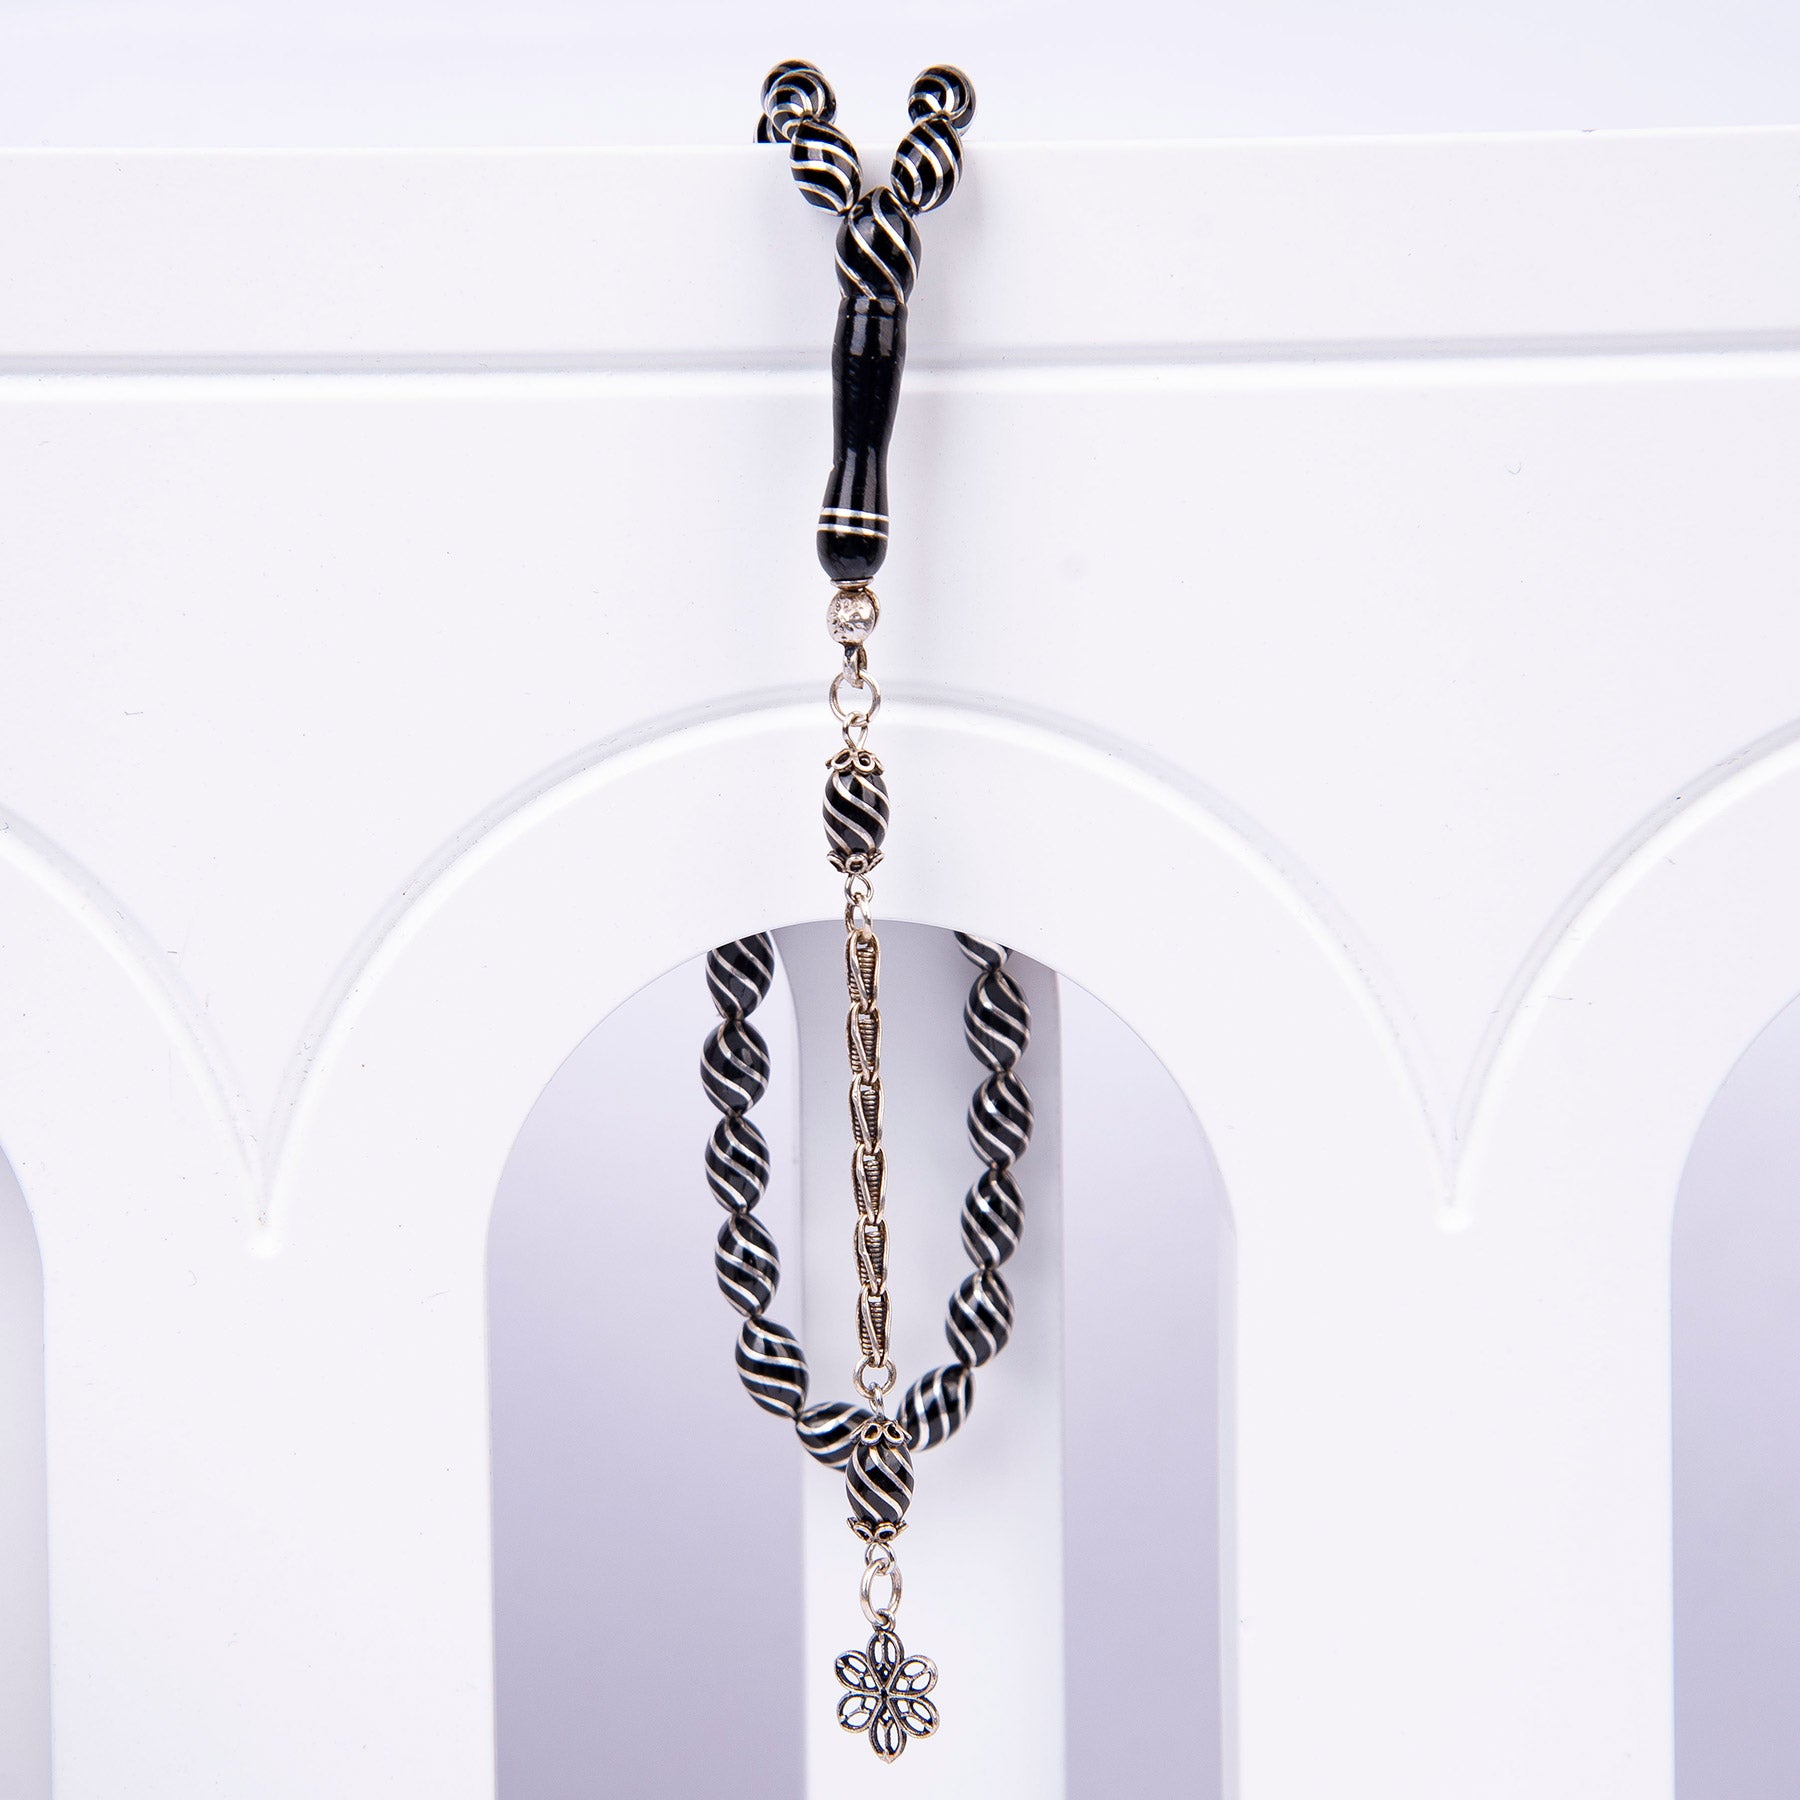 Ve Tesbih Oltu Stone Rosary with Silver Tassels 2